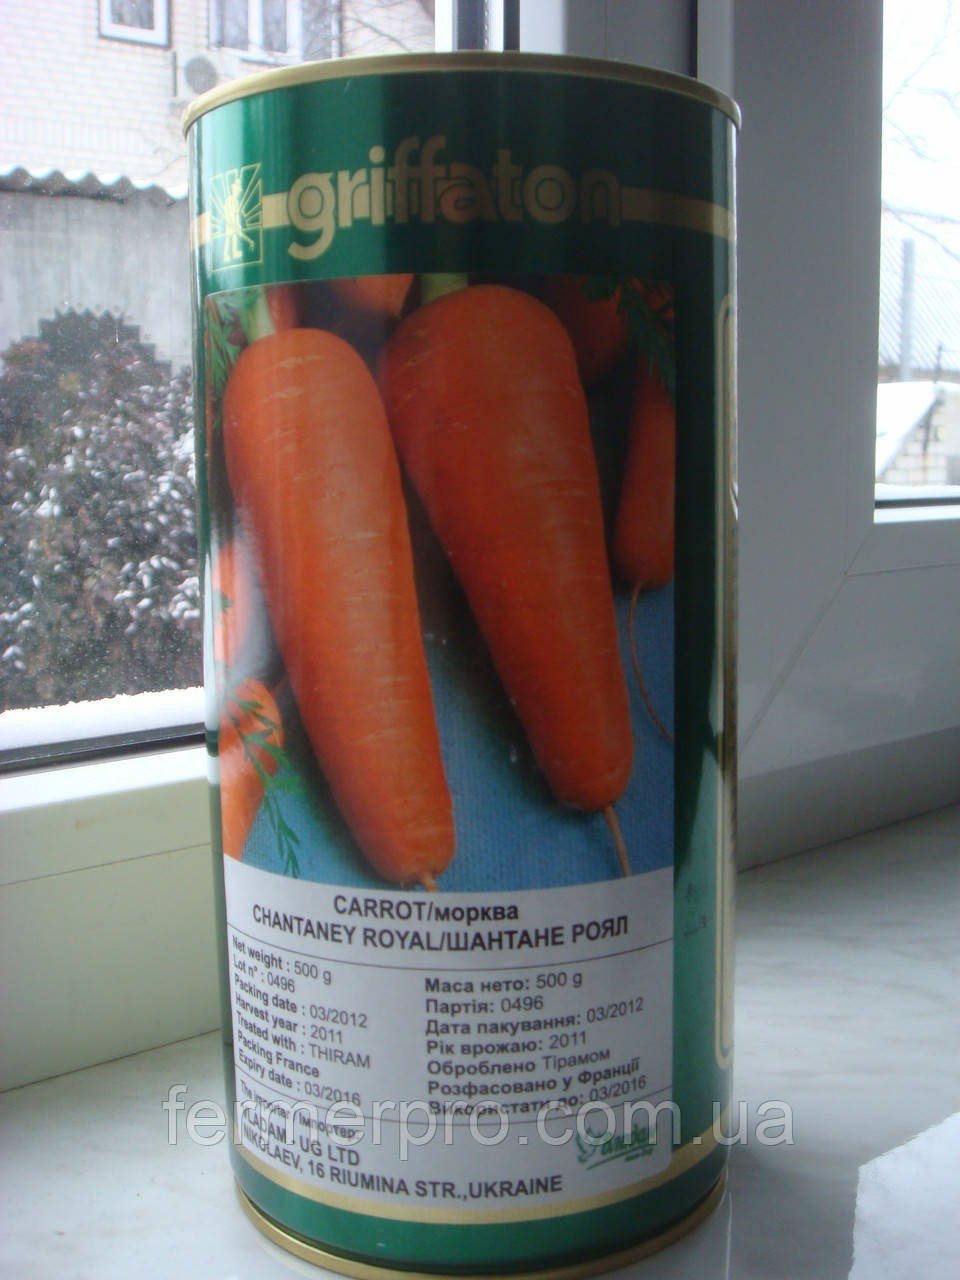 Семена моркови упаковка виды проросших семян